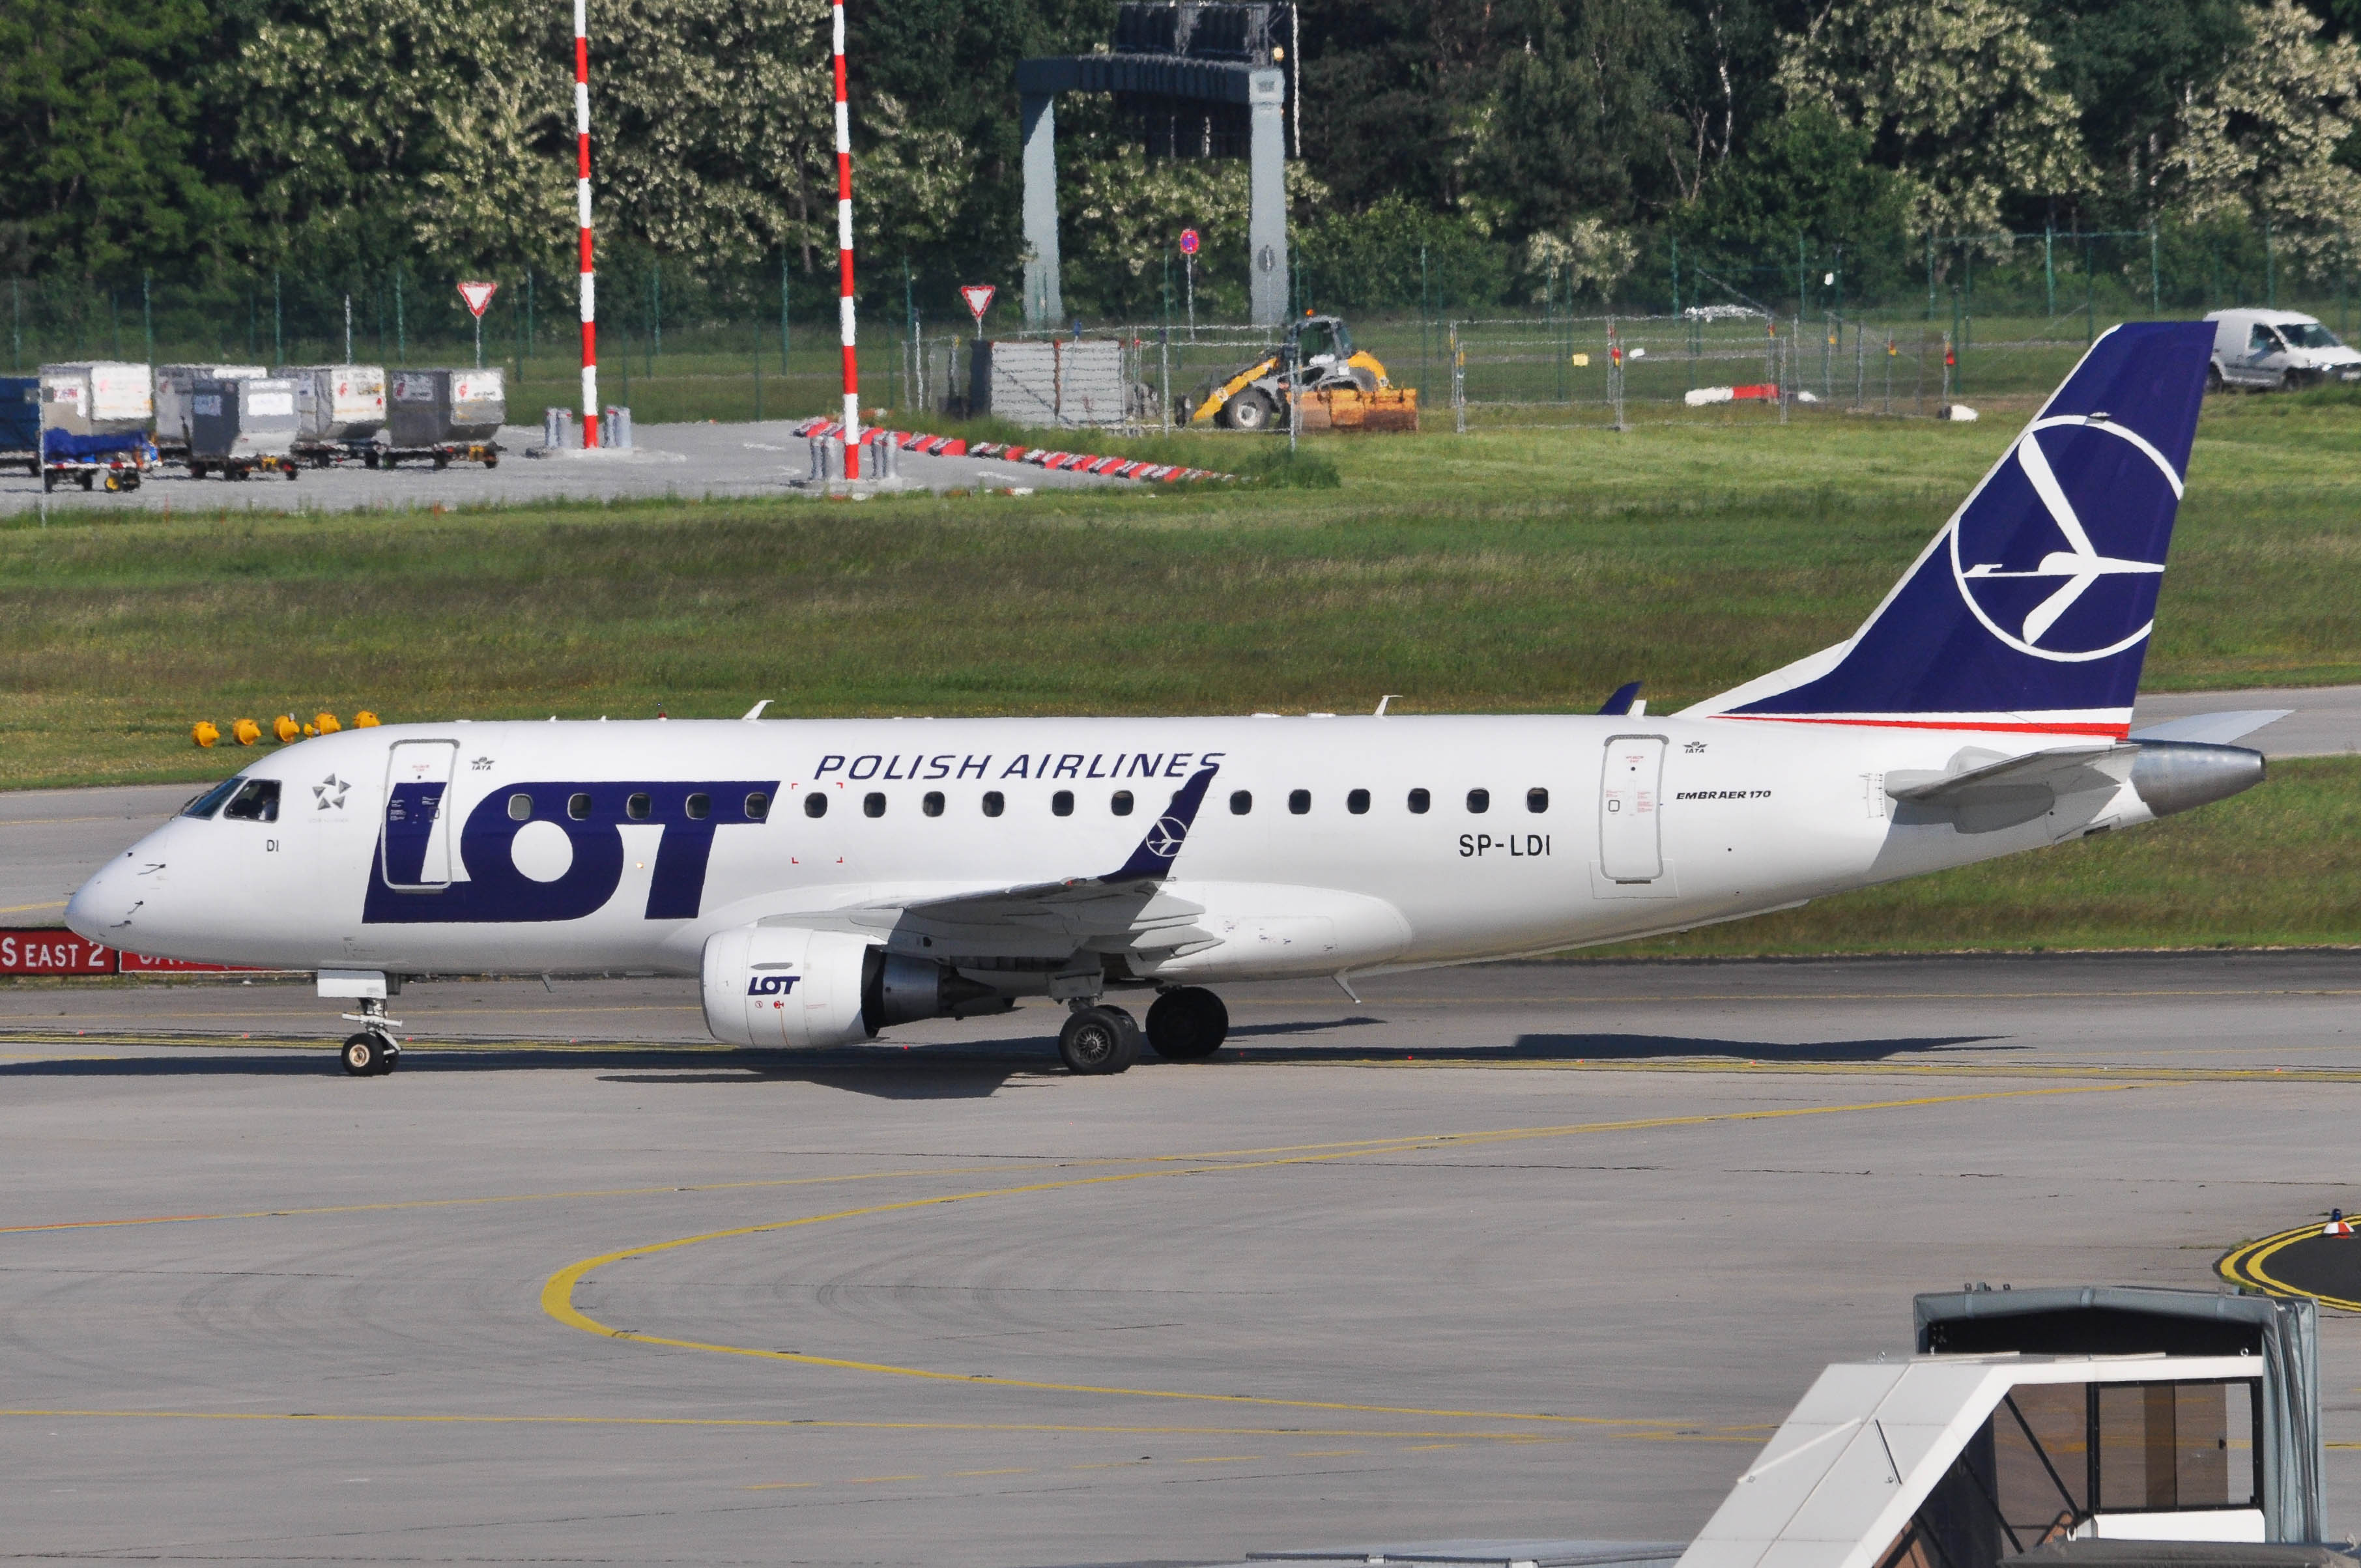 SP-LDI/SPLDI LOT Polish Airlines Embraer ERJ-170 Airframe Information - AVSpotters.com